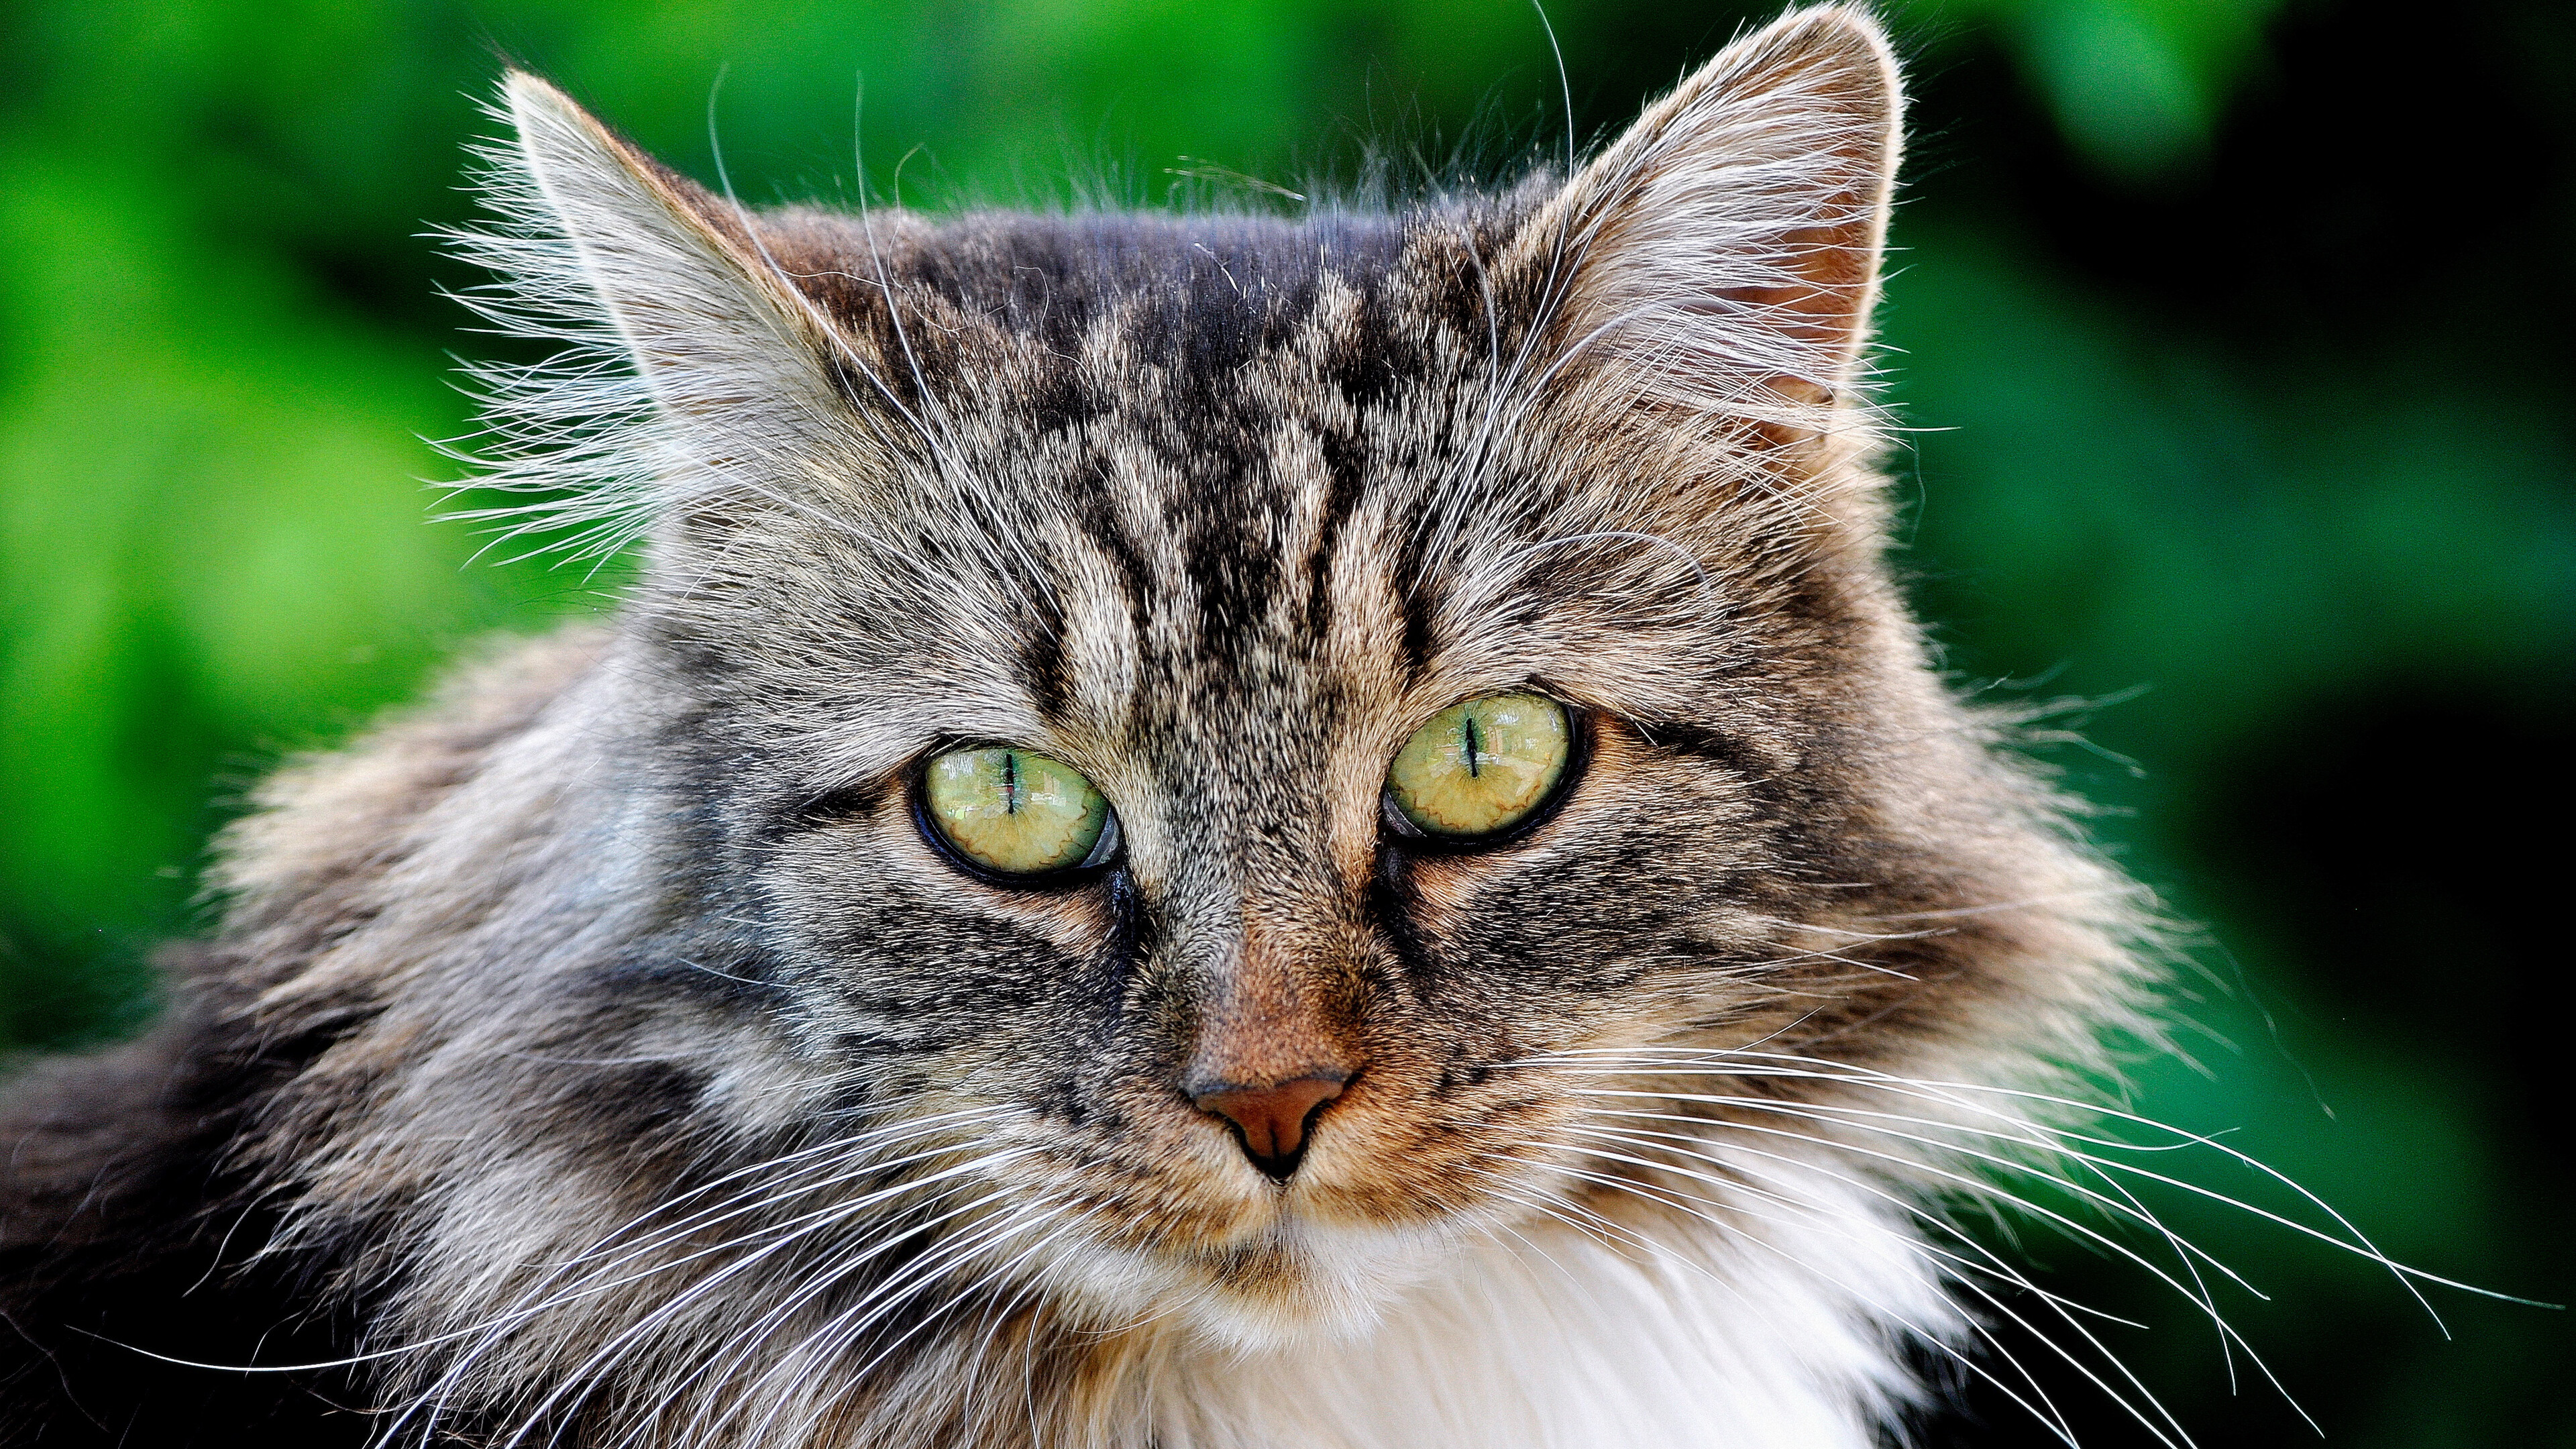 Cat 4K wallpaper, High-resolution image, Beautiful feline, Captivating eyes, 3840x2160 4K Desktop